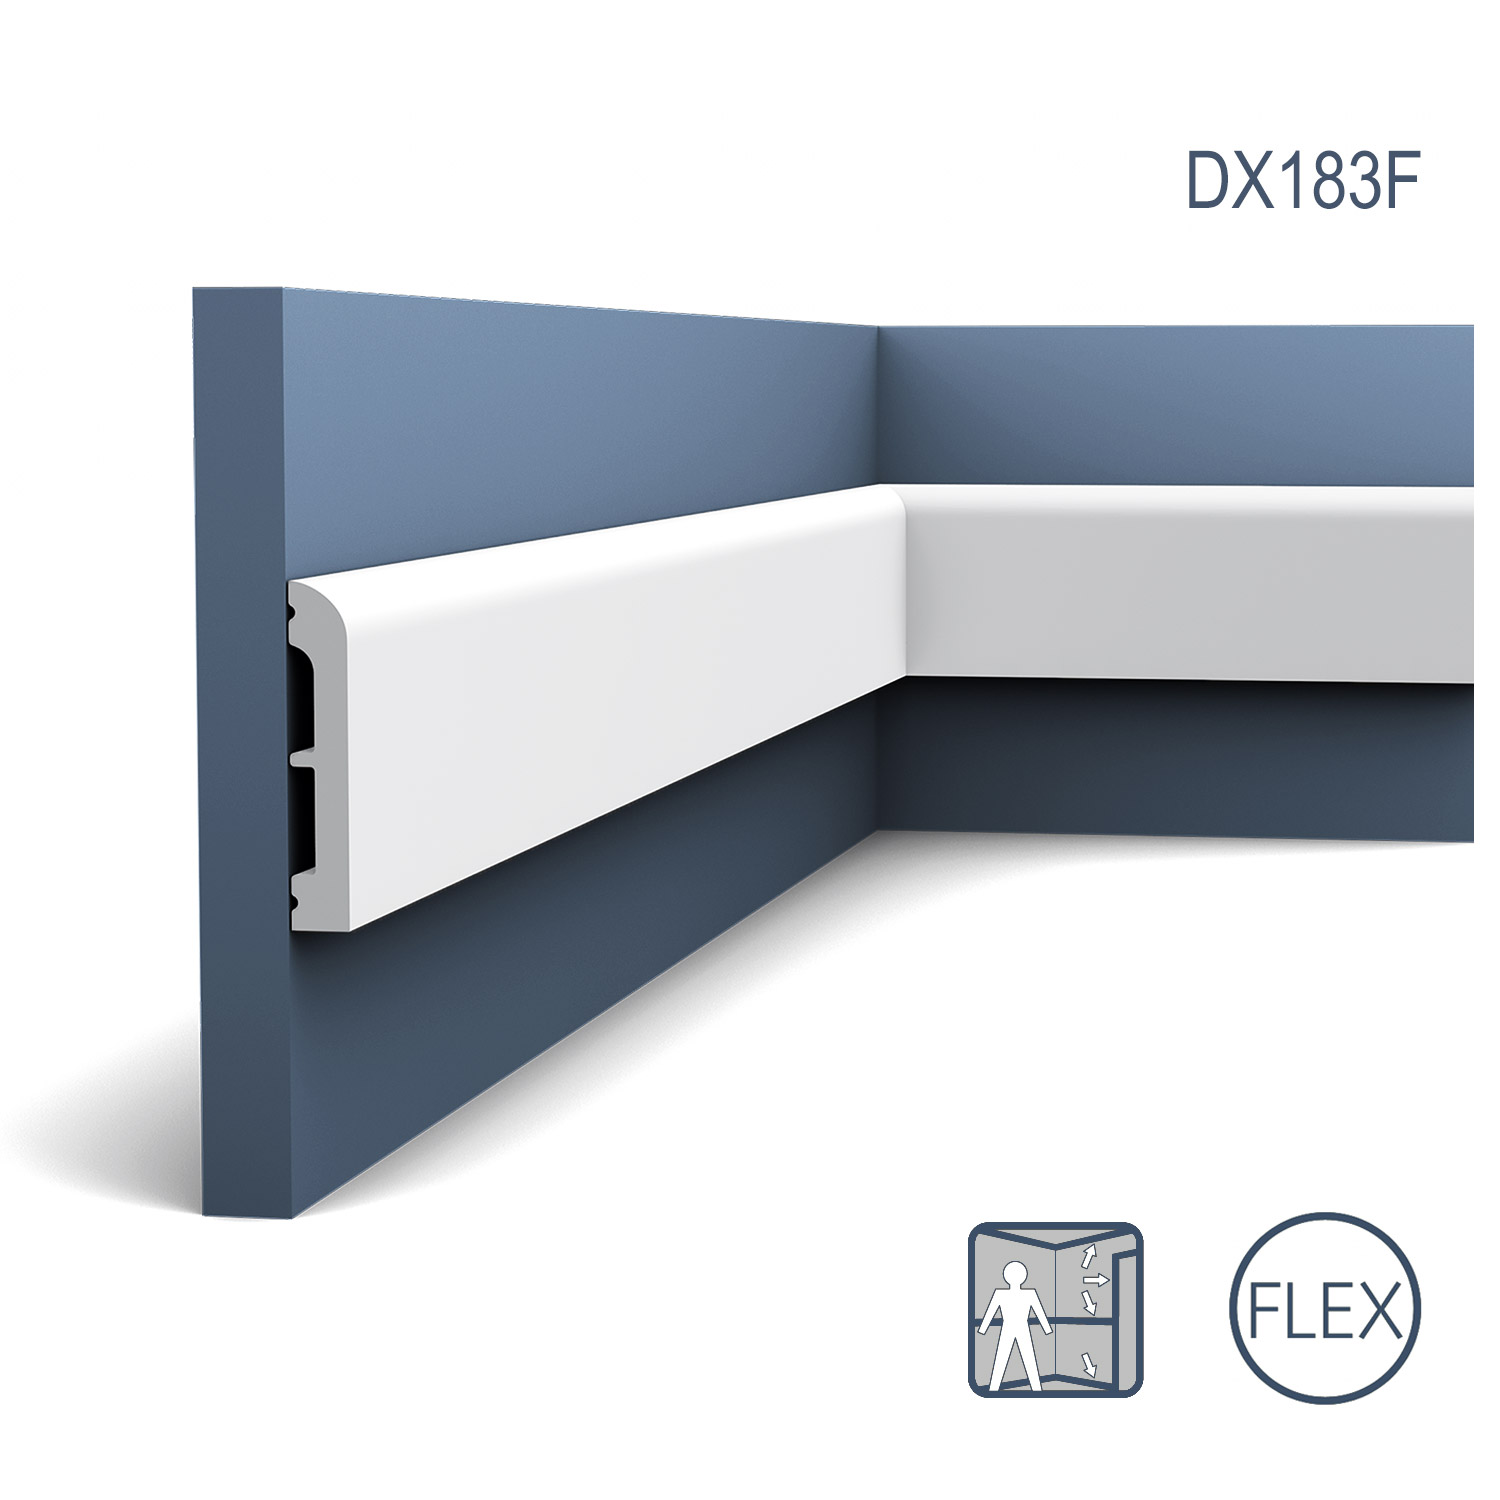 Plinta Flex Axxent SX183F, Dimensiuni: 200 X 1.3 X 7.5 cm, Orac Decor